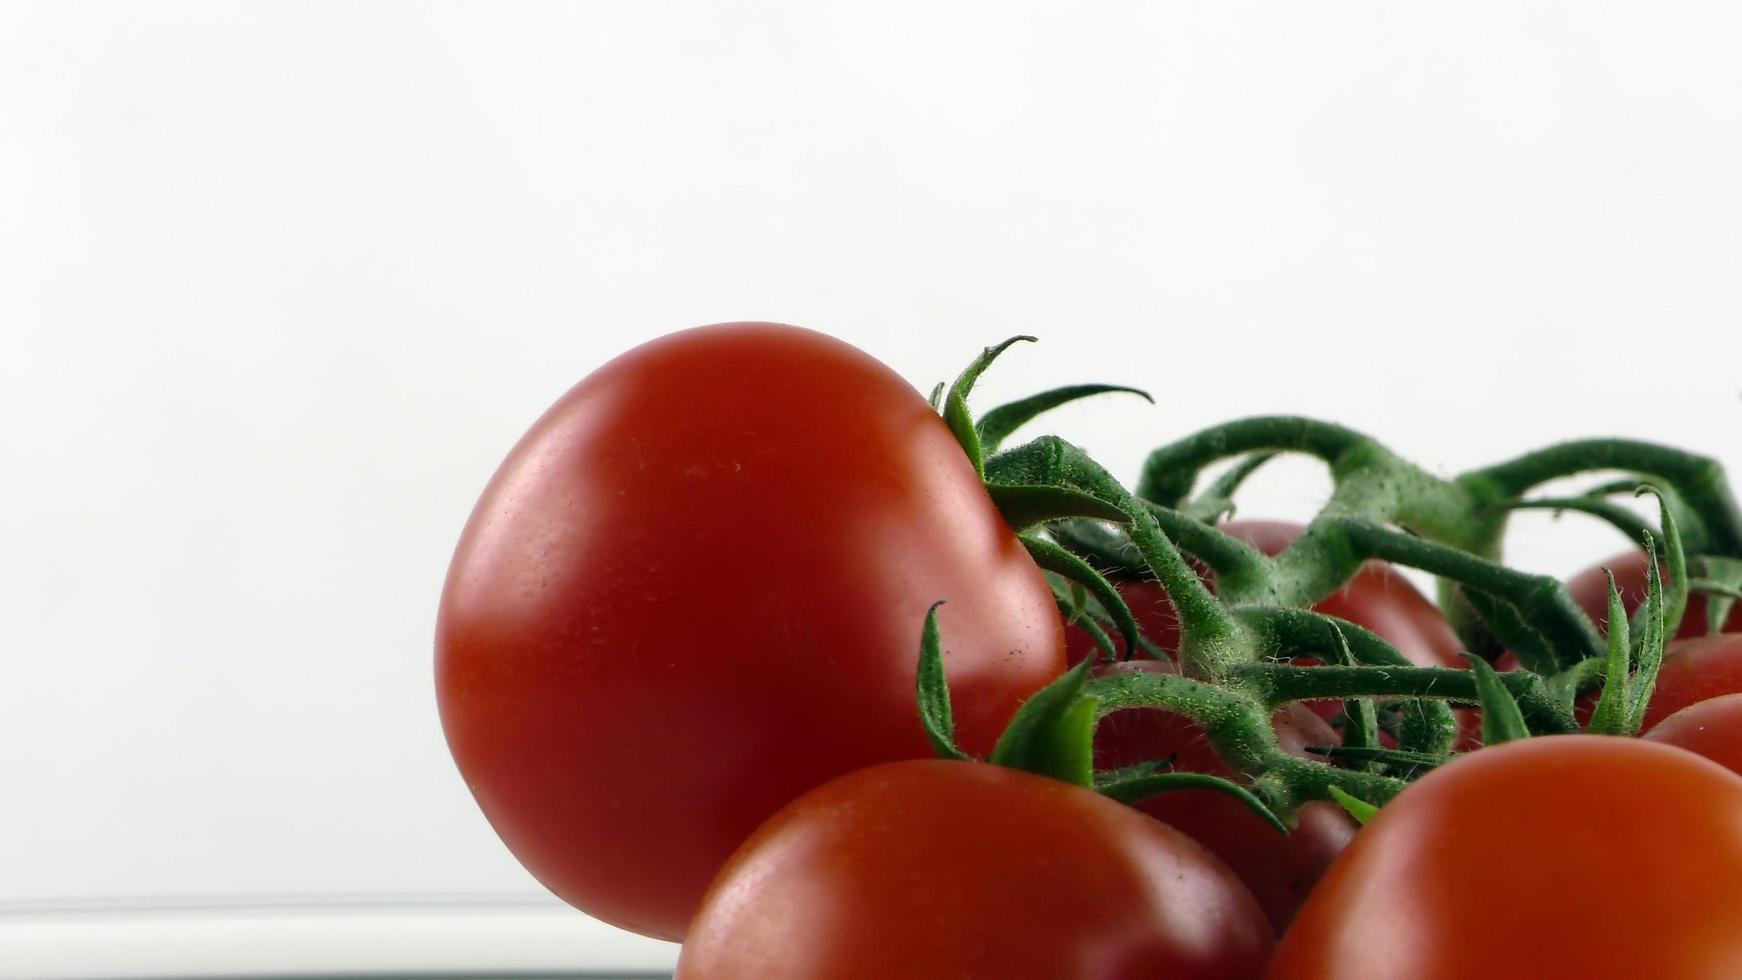 verdura di pomodoro sana biologica foto